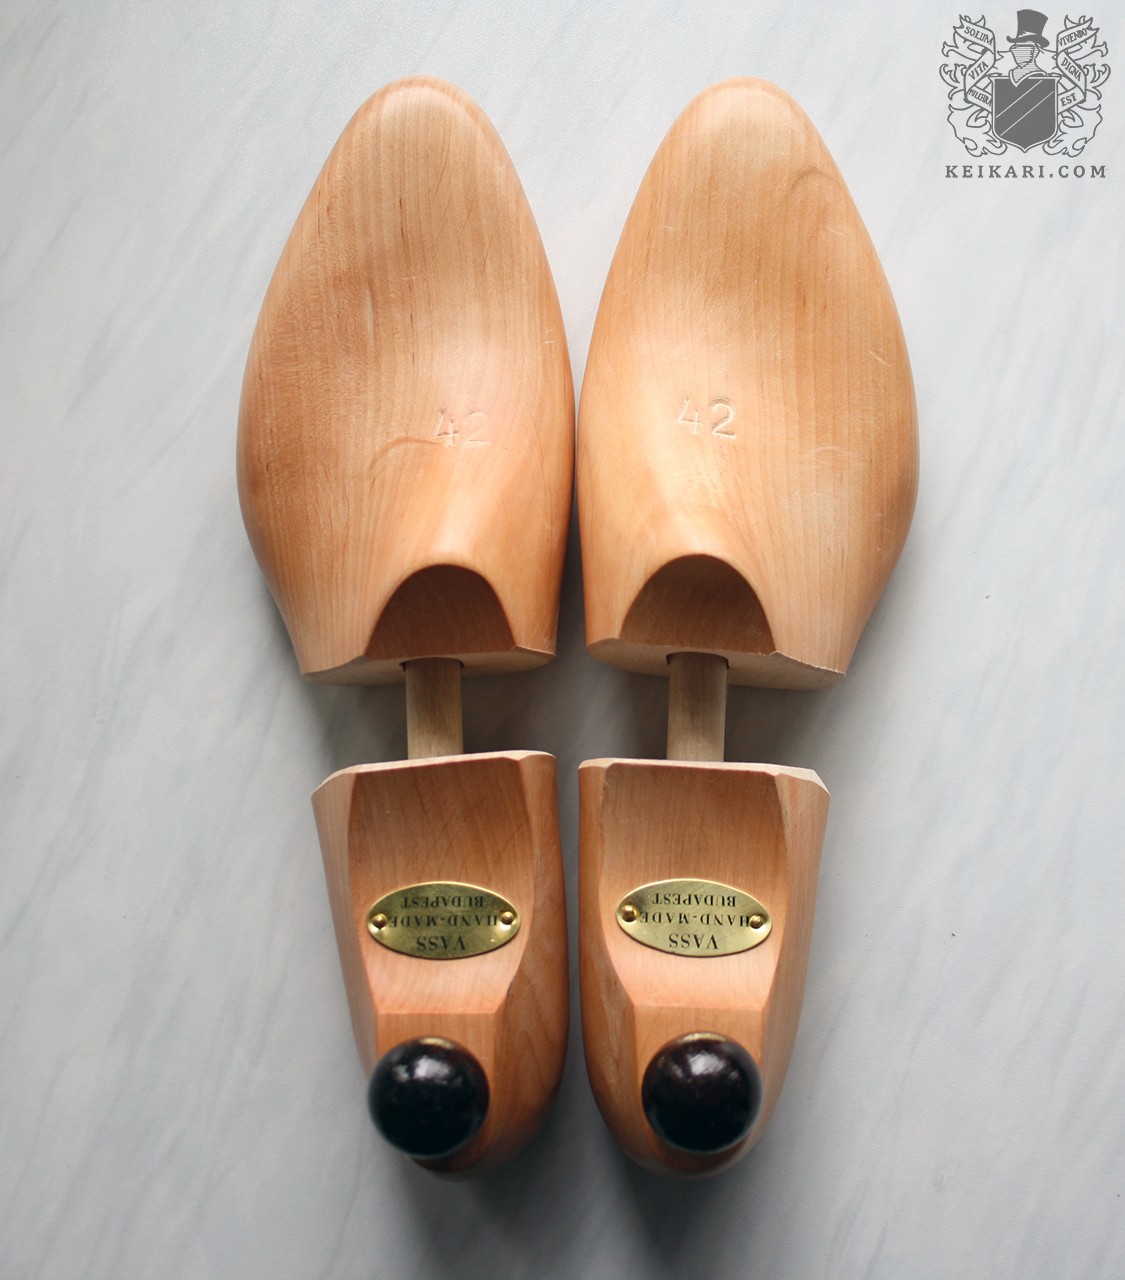 Made_to_order_shoes_from_Lászlò_Vass_at_Keikari_dot_com18